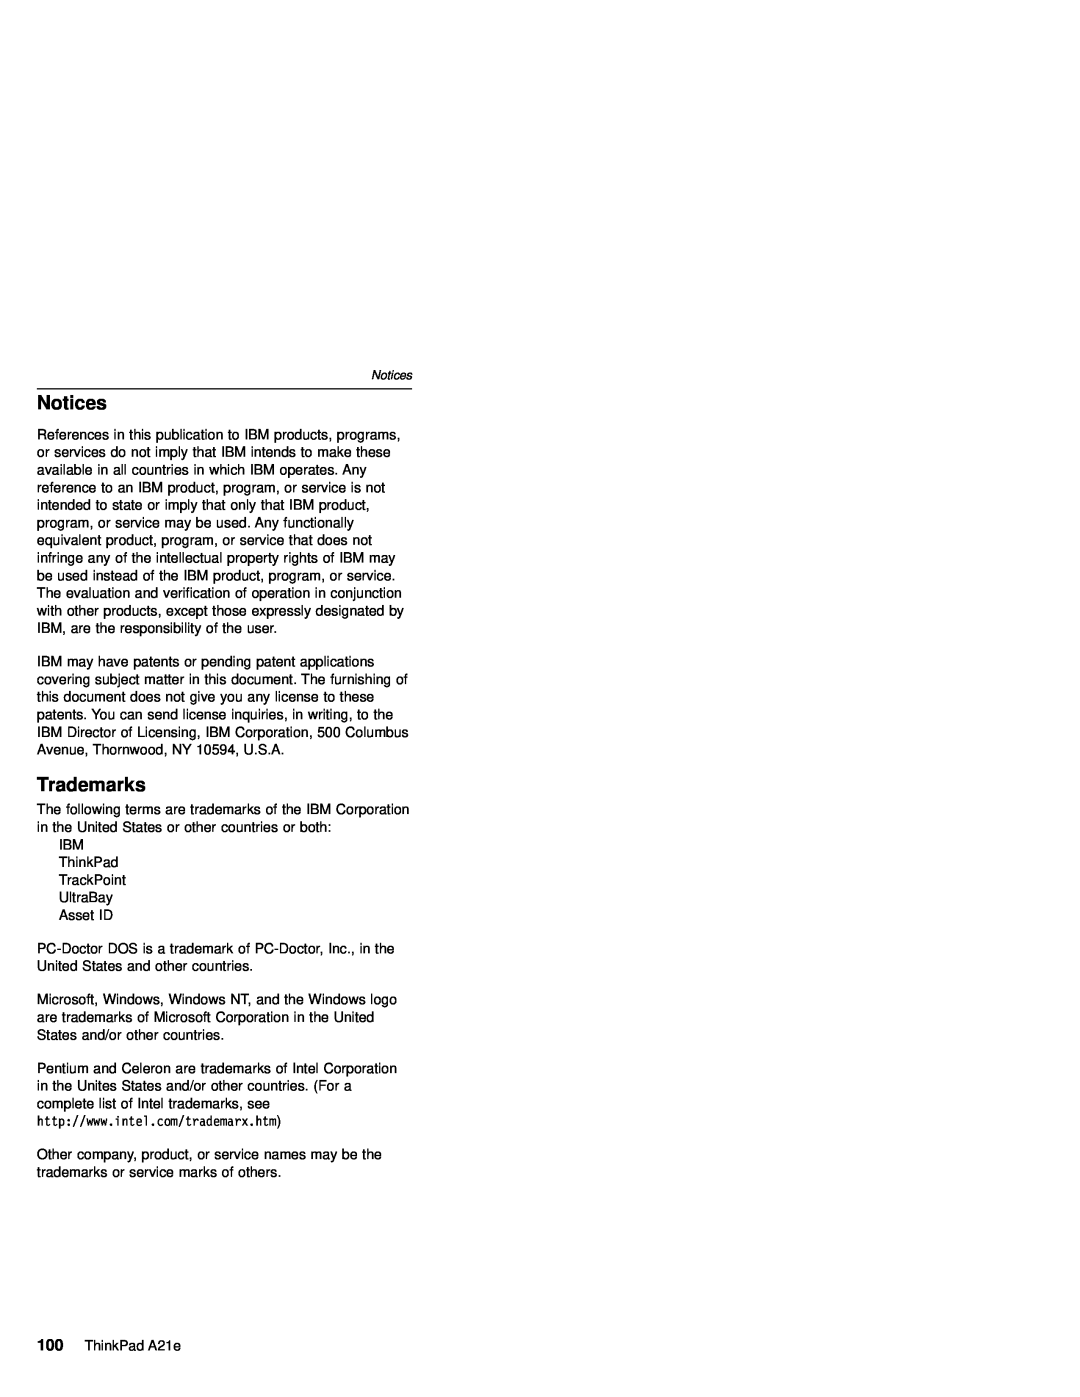 IBM MT 2632 manual Notices, Trademarks 